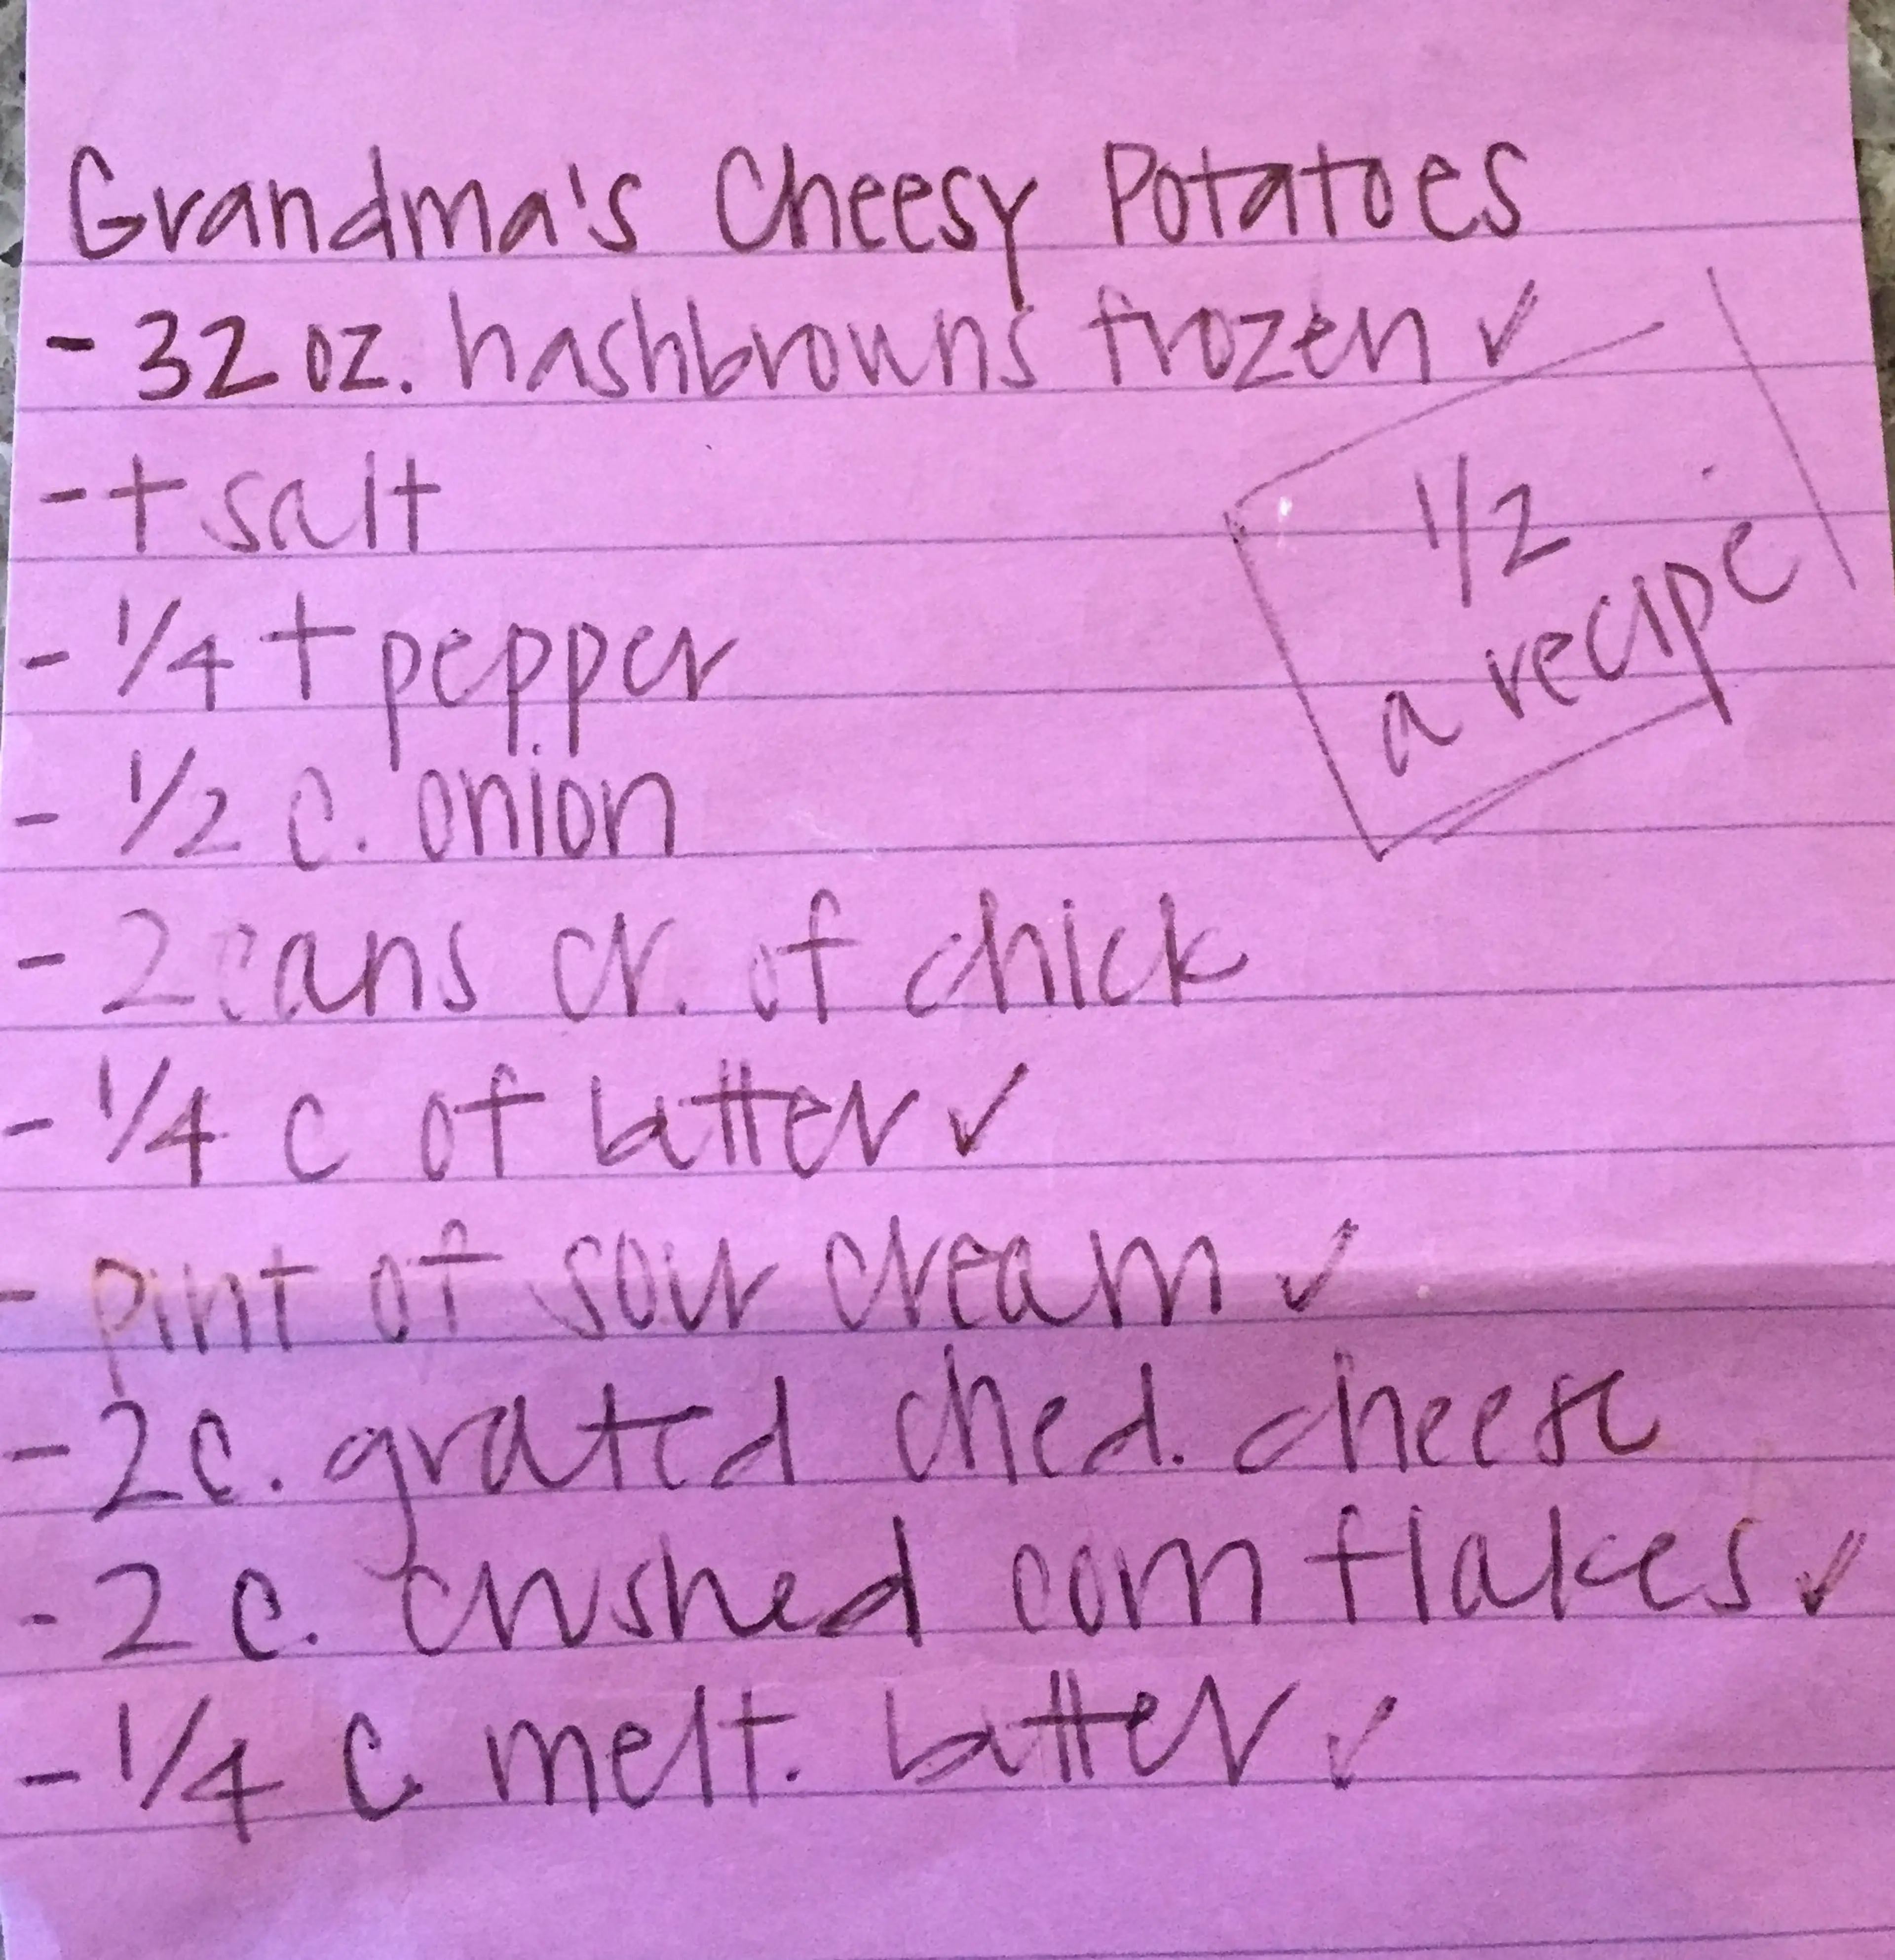 Grandma’s Cheesy Potatoes